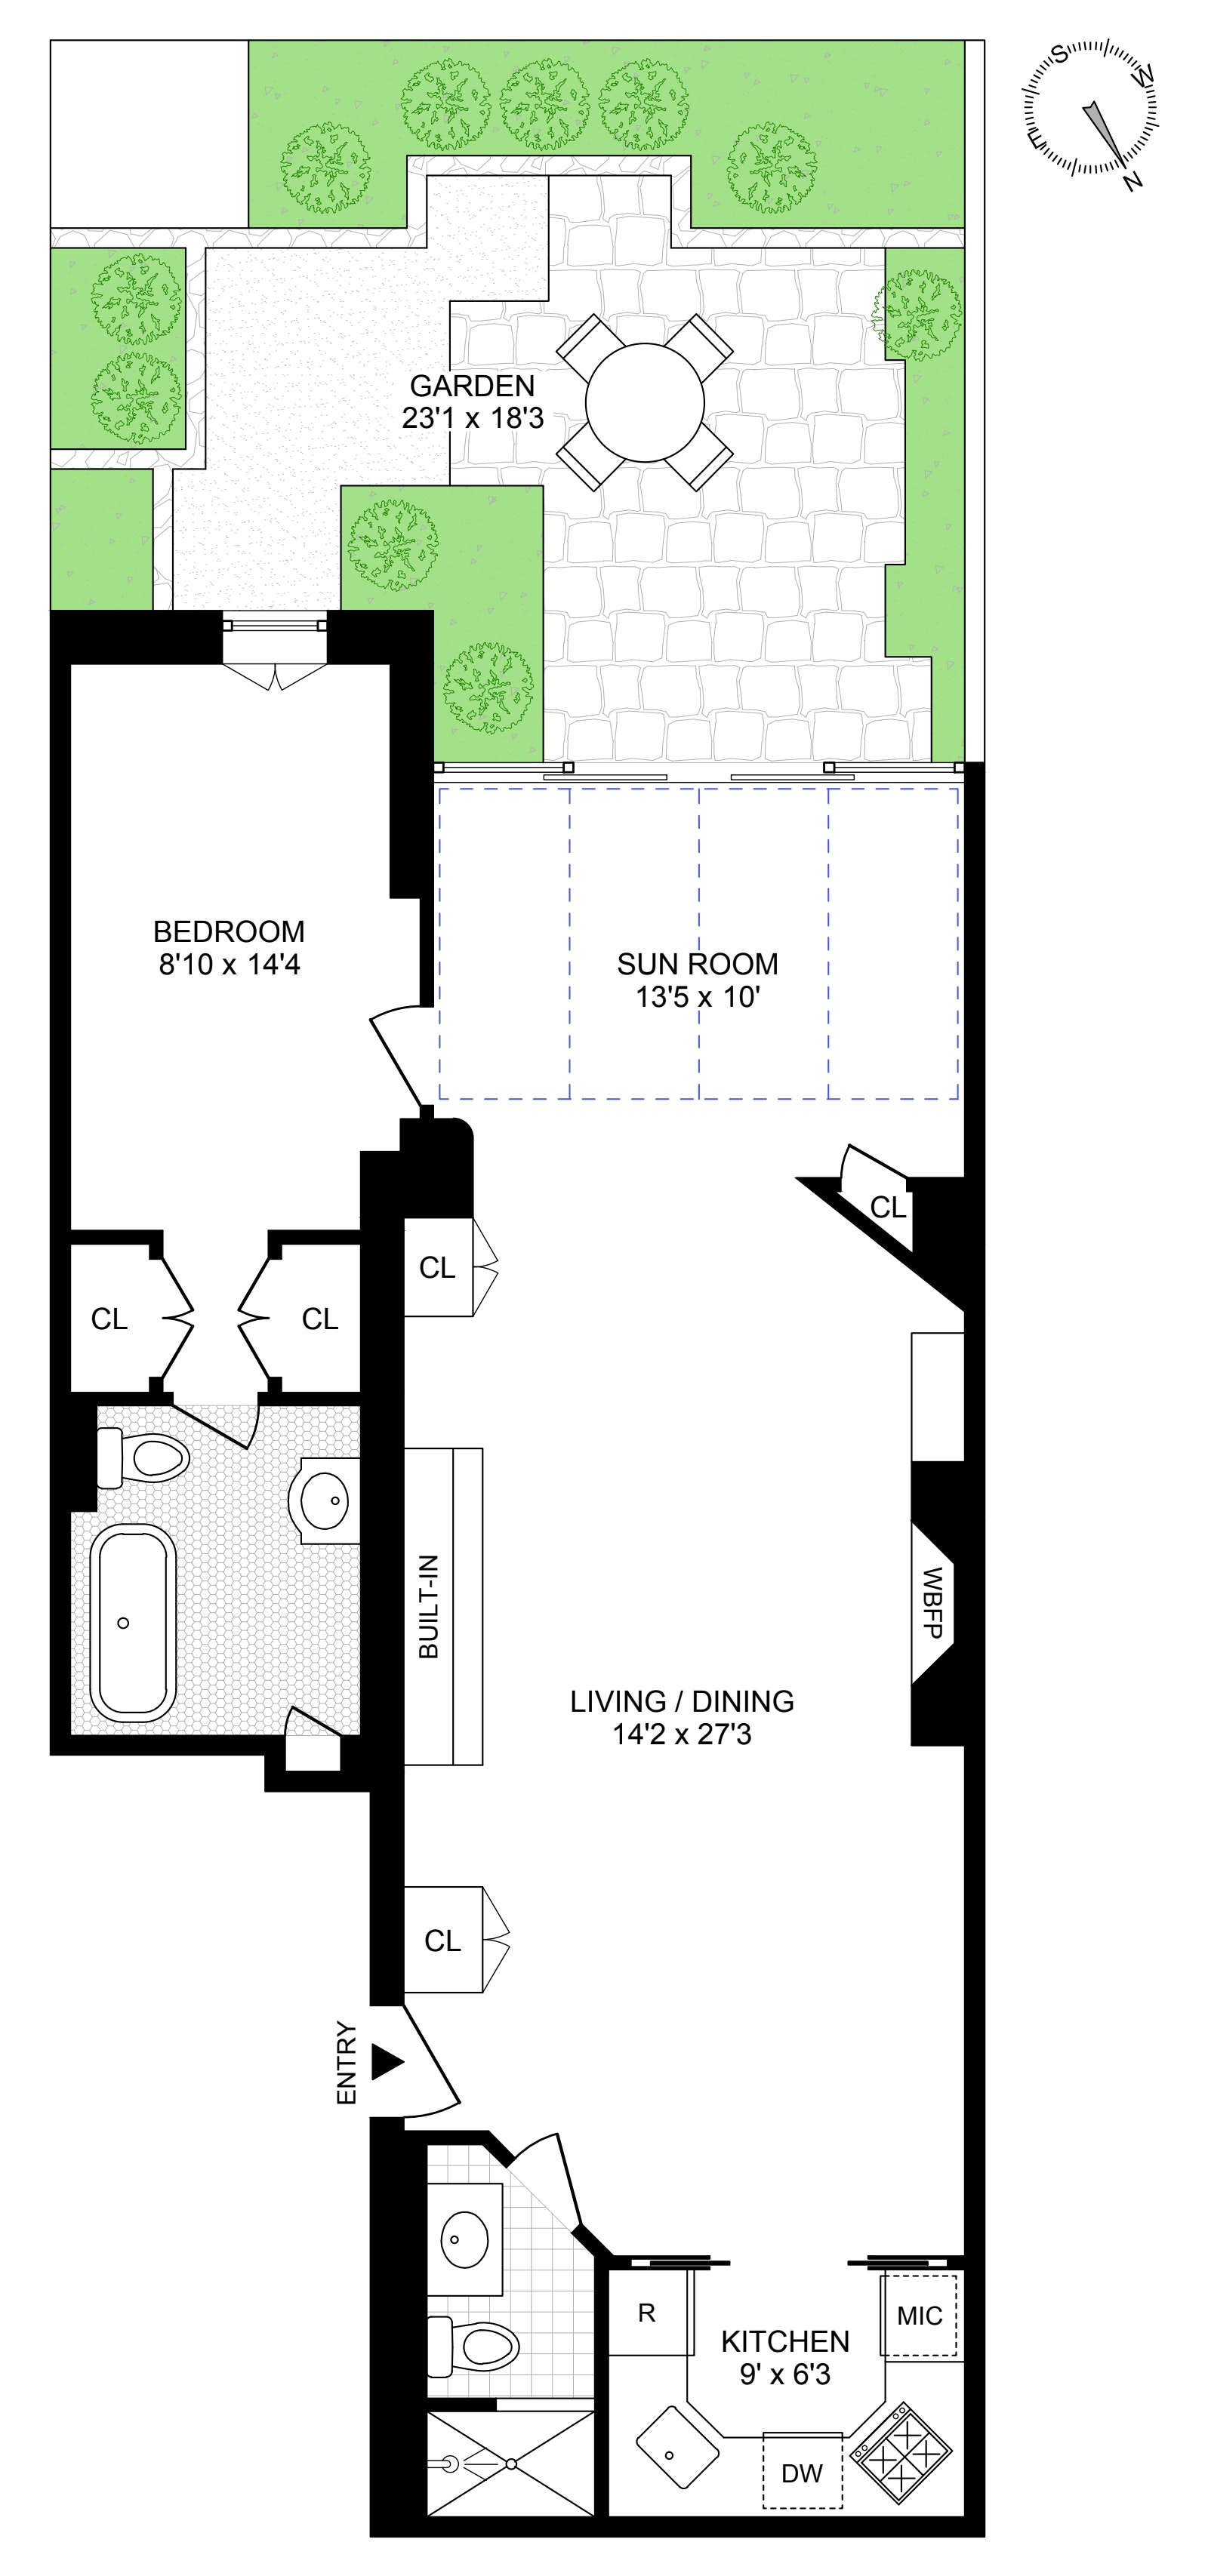 Floorplan for 48 Gramercy Park North, 1B